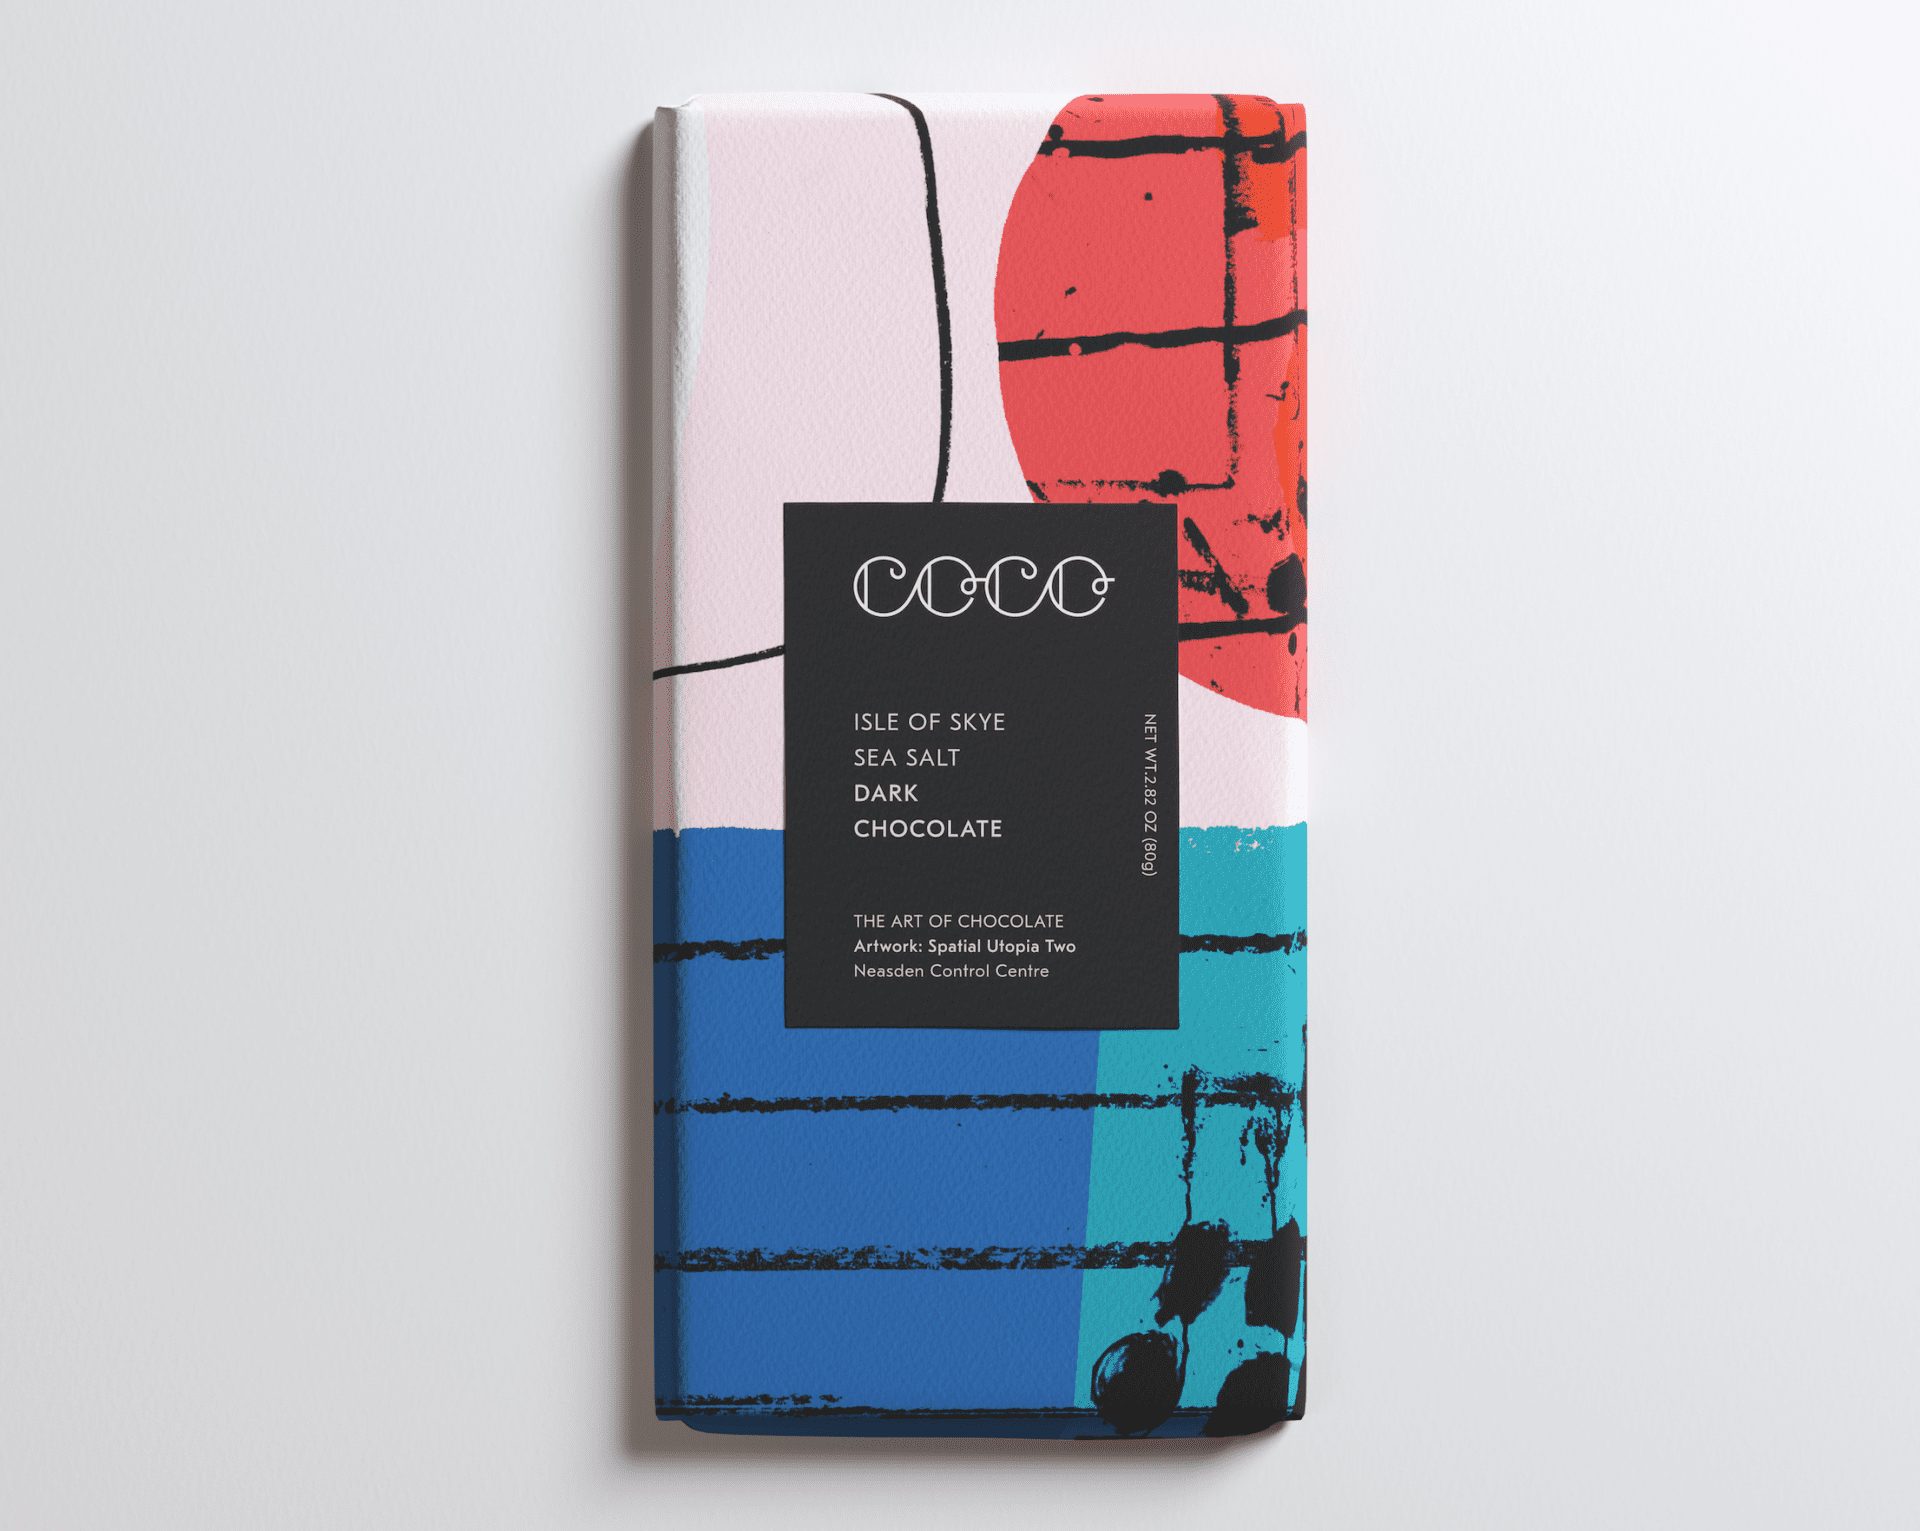 Coco chocolate, OnOffice magazine, healthy snacks